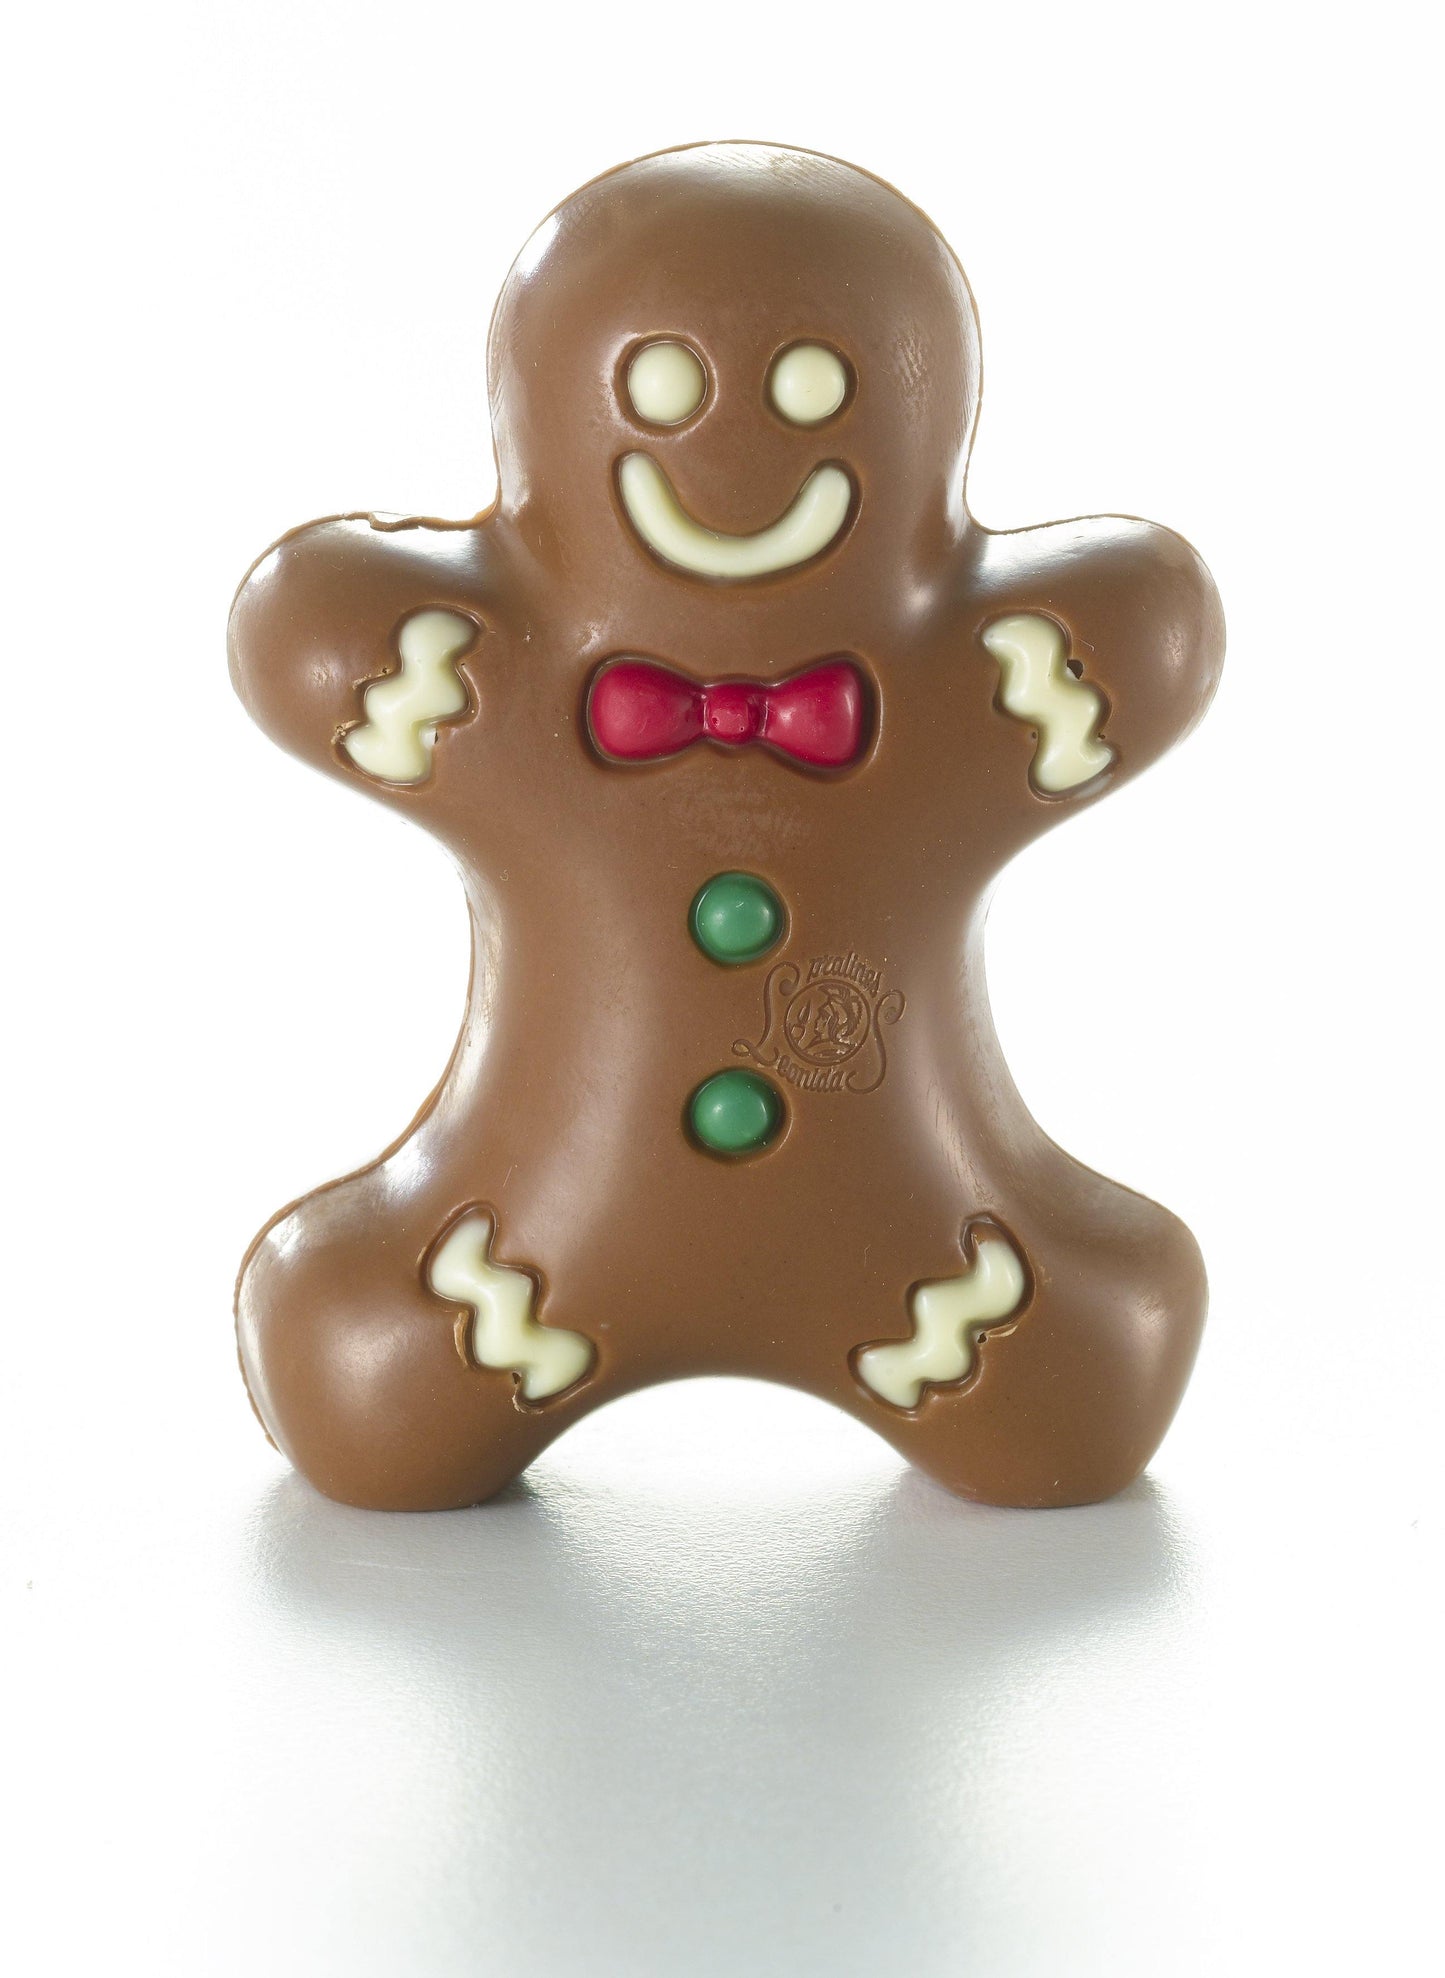 
                  
                    Gingerbread Man Milk Chocolate Figure 30g. with 2 Christmas Balls - leonidasbrighton.co.uk - Leonidas Brighton
                  
                